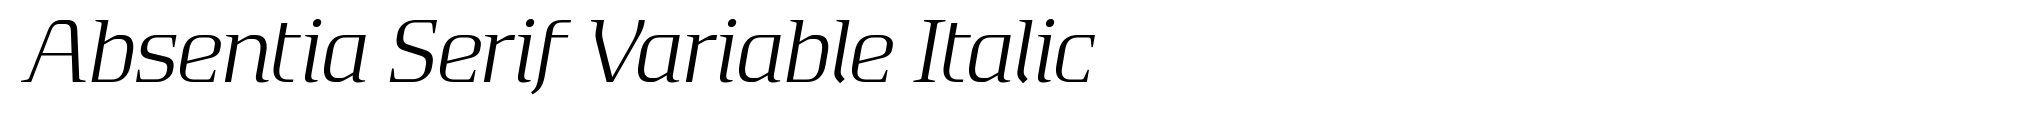 Absentia Serif Variable Italic image